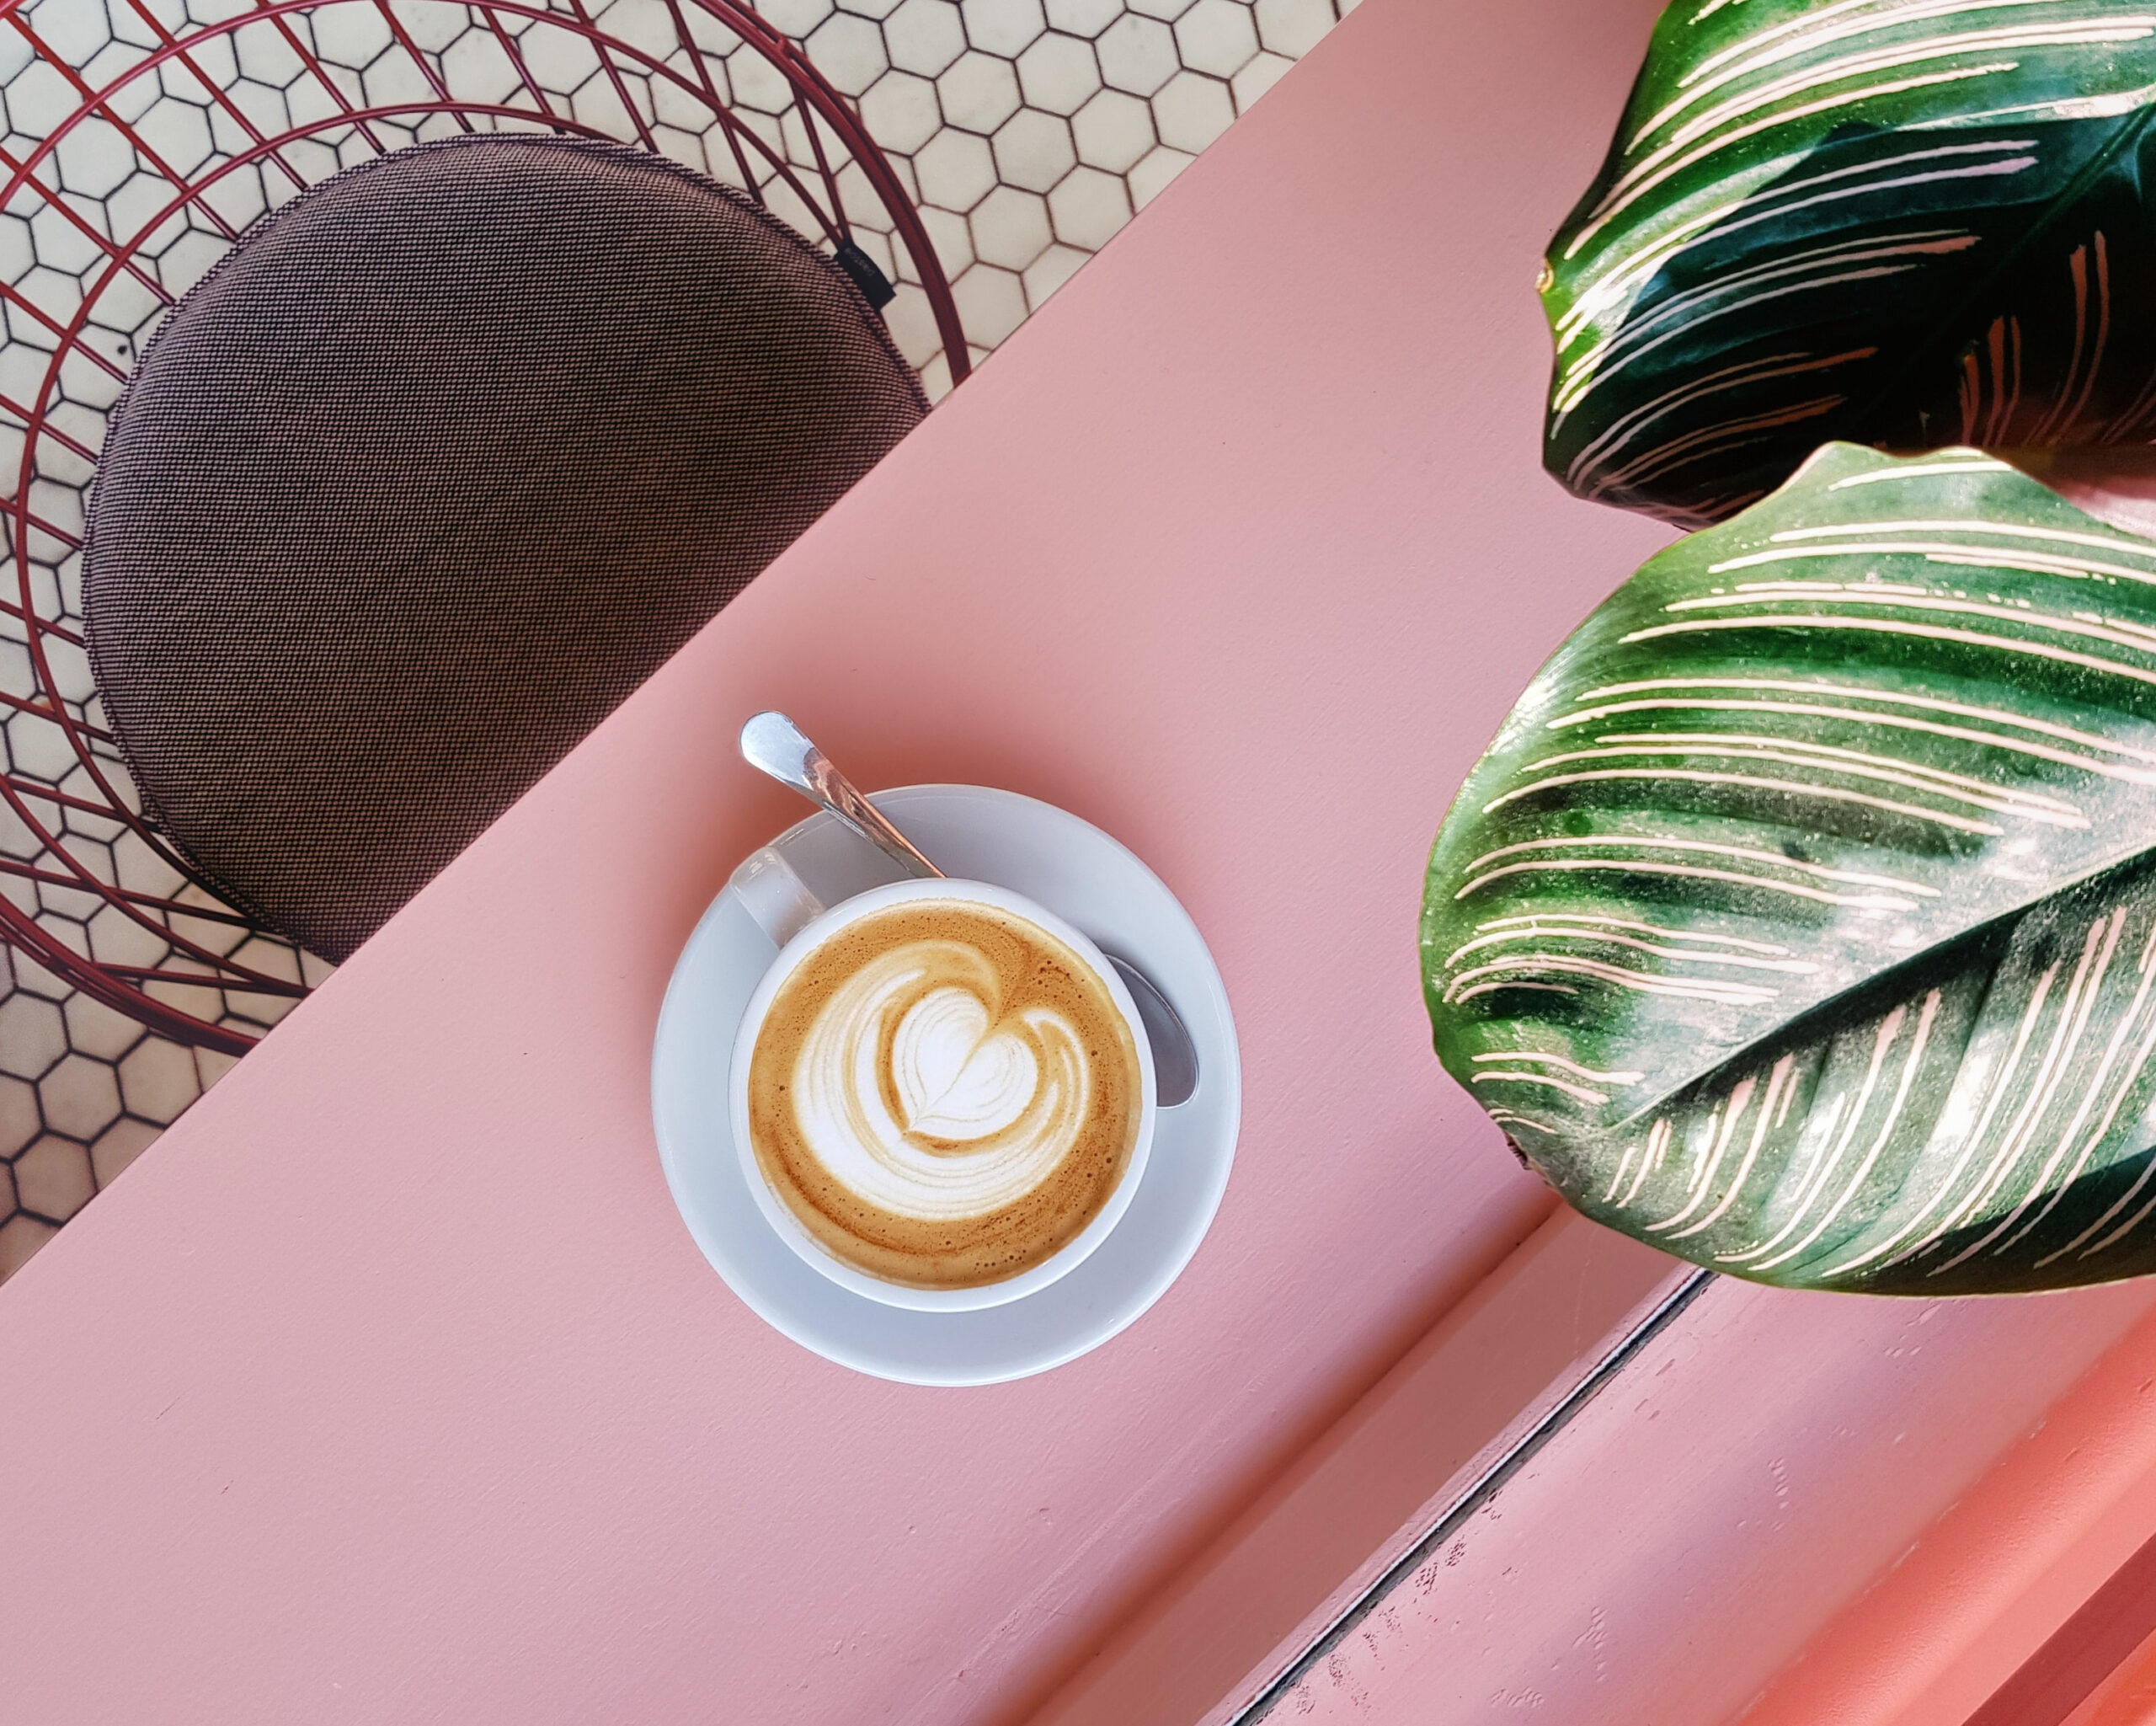 A latte and plant on a table. Photo by Natanja Grün via Unsplash.